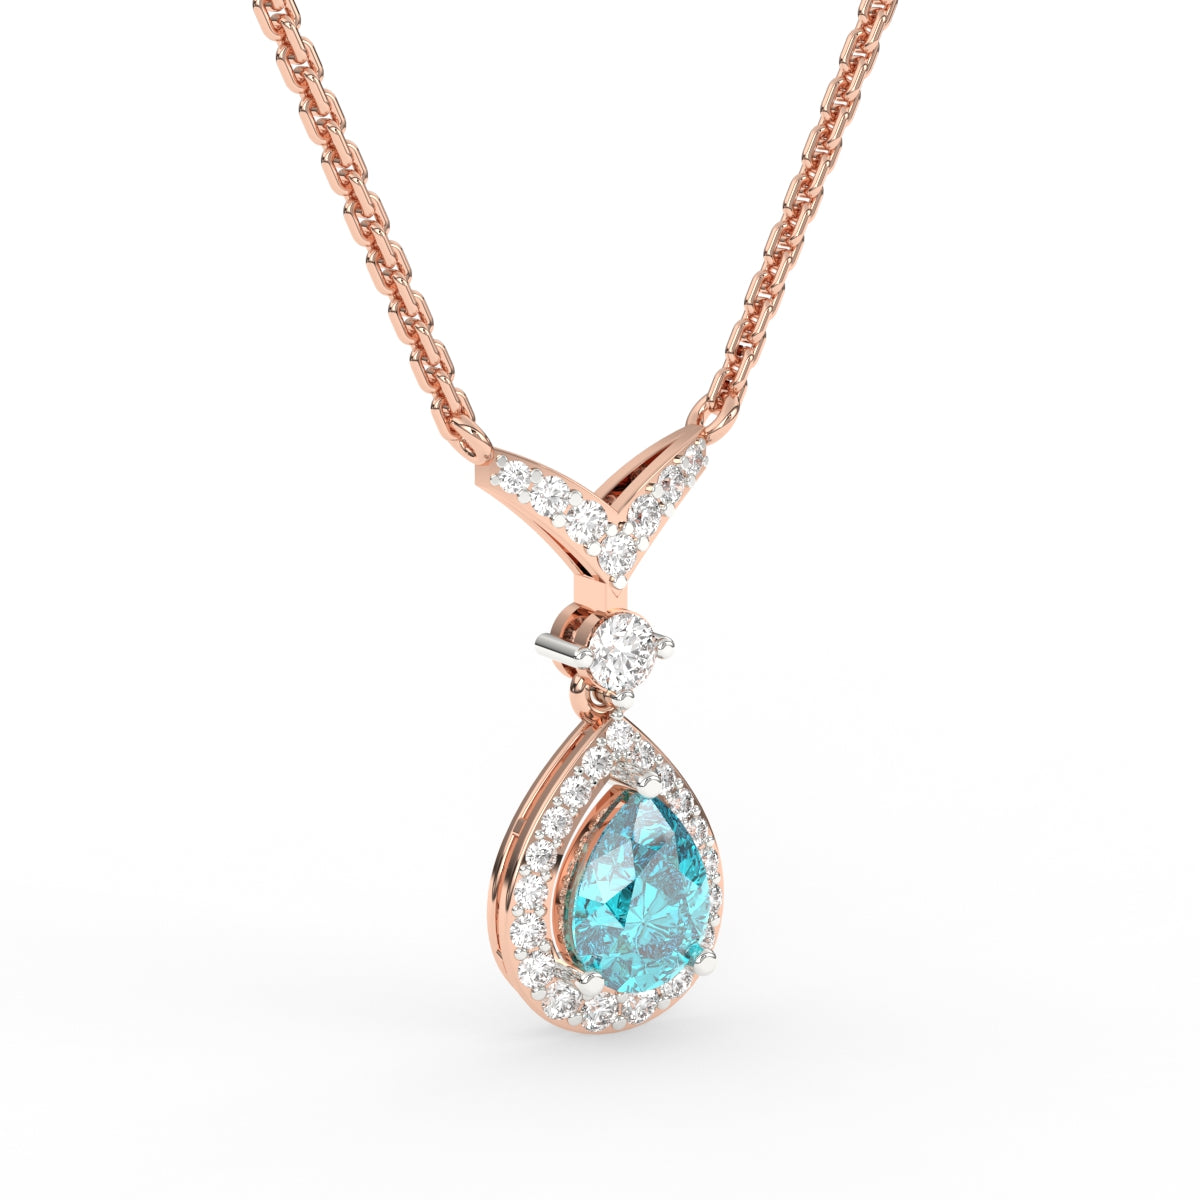 Blue pear diamond pendant chain